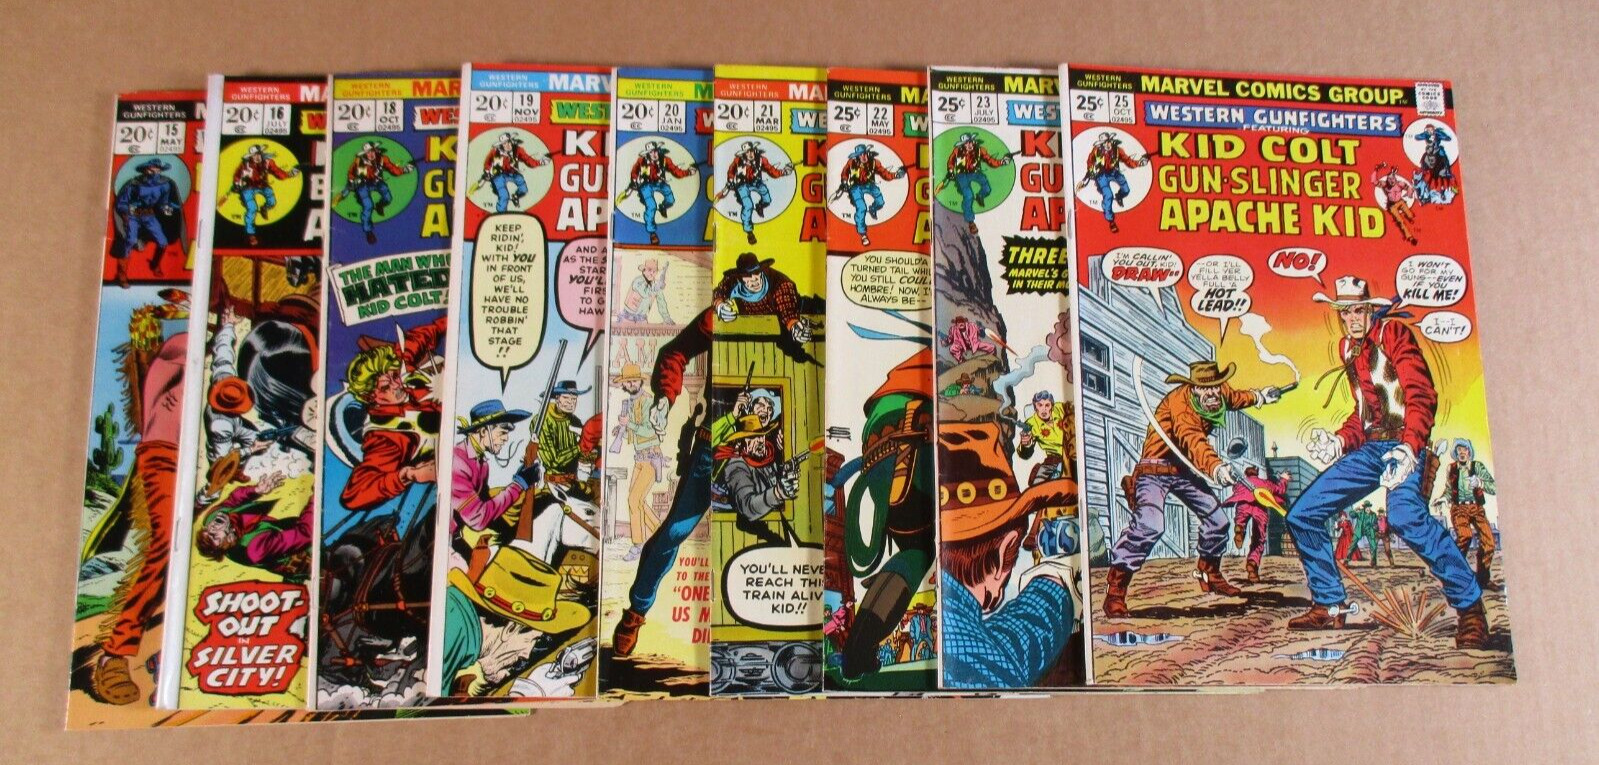 Western Gunfighters Marvel Comics Lot of 8 Kid Colt Gun-Slinger Apache Kid